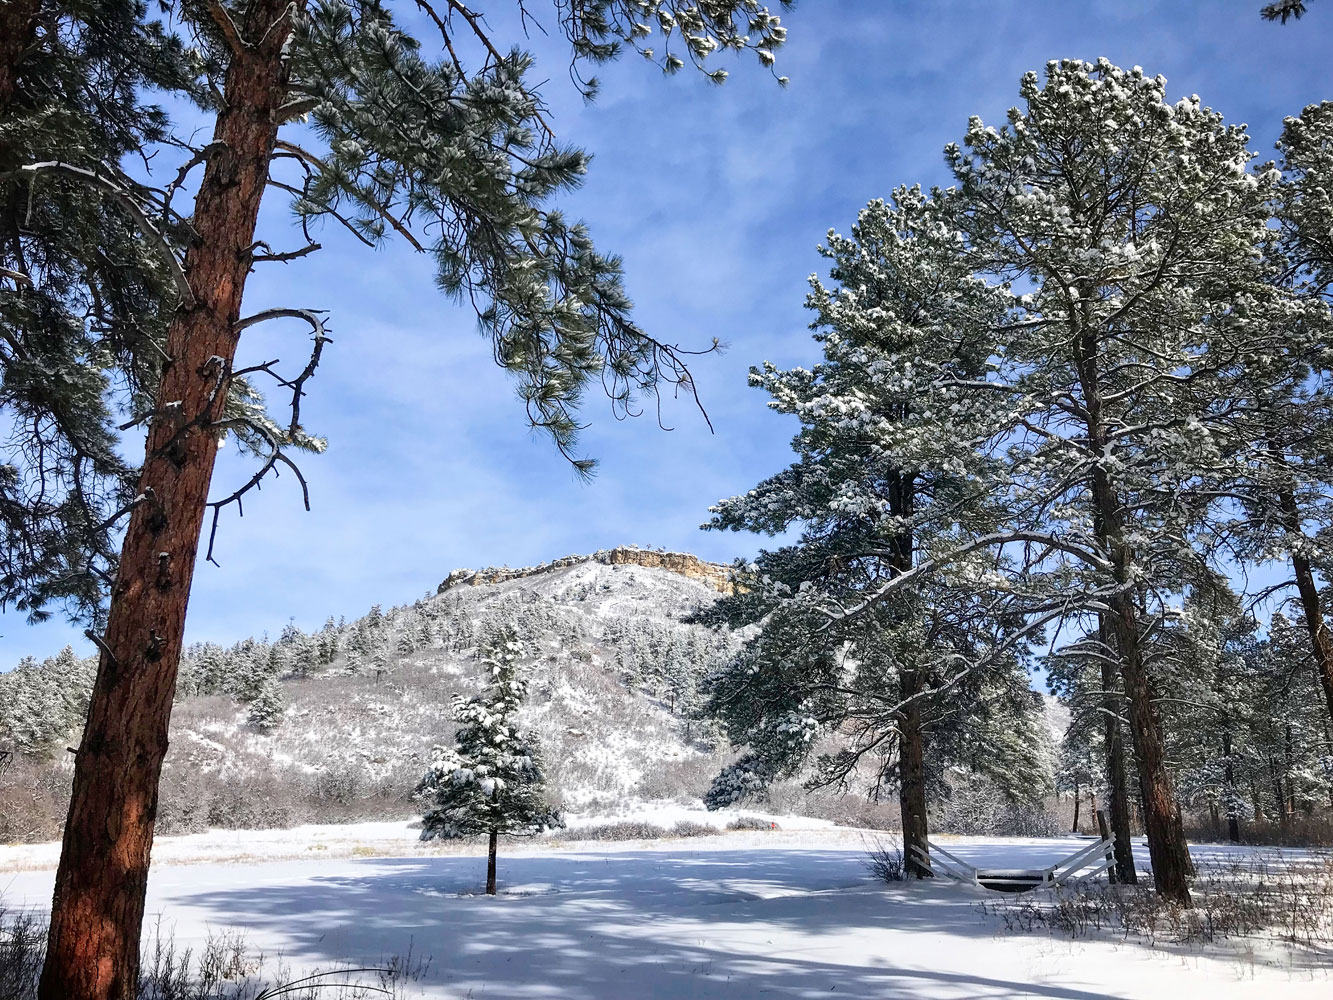 snowy scene with pine trees